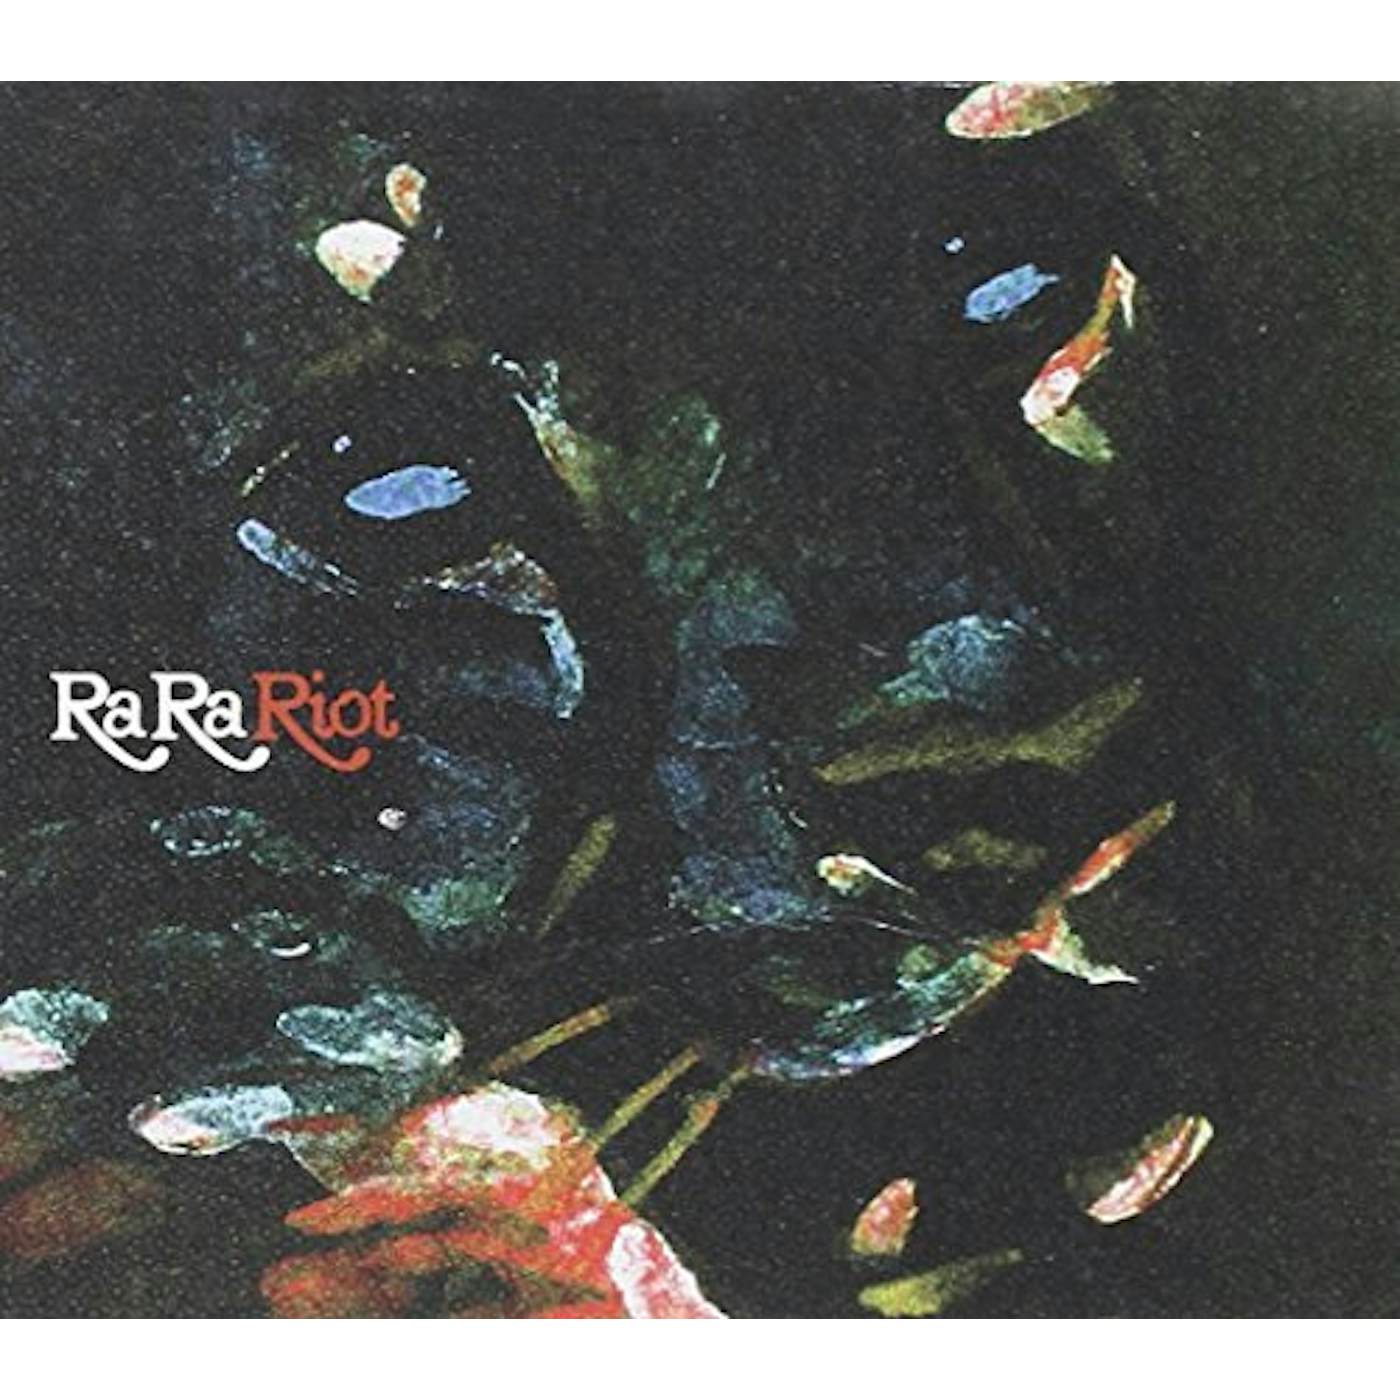 RA RA RIOT CD